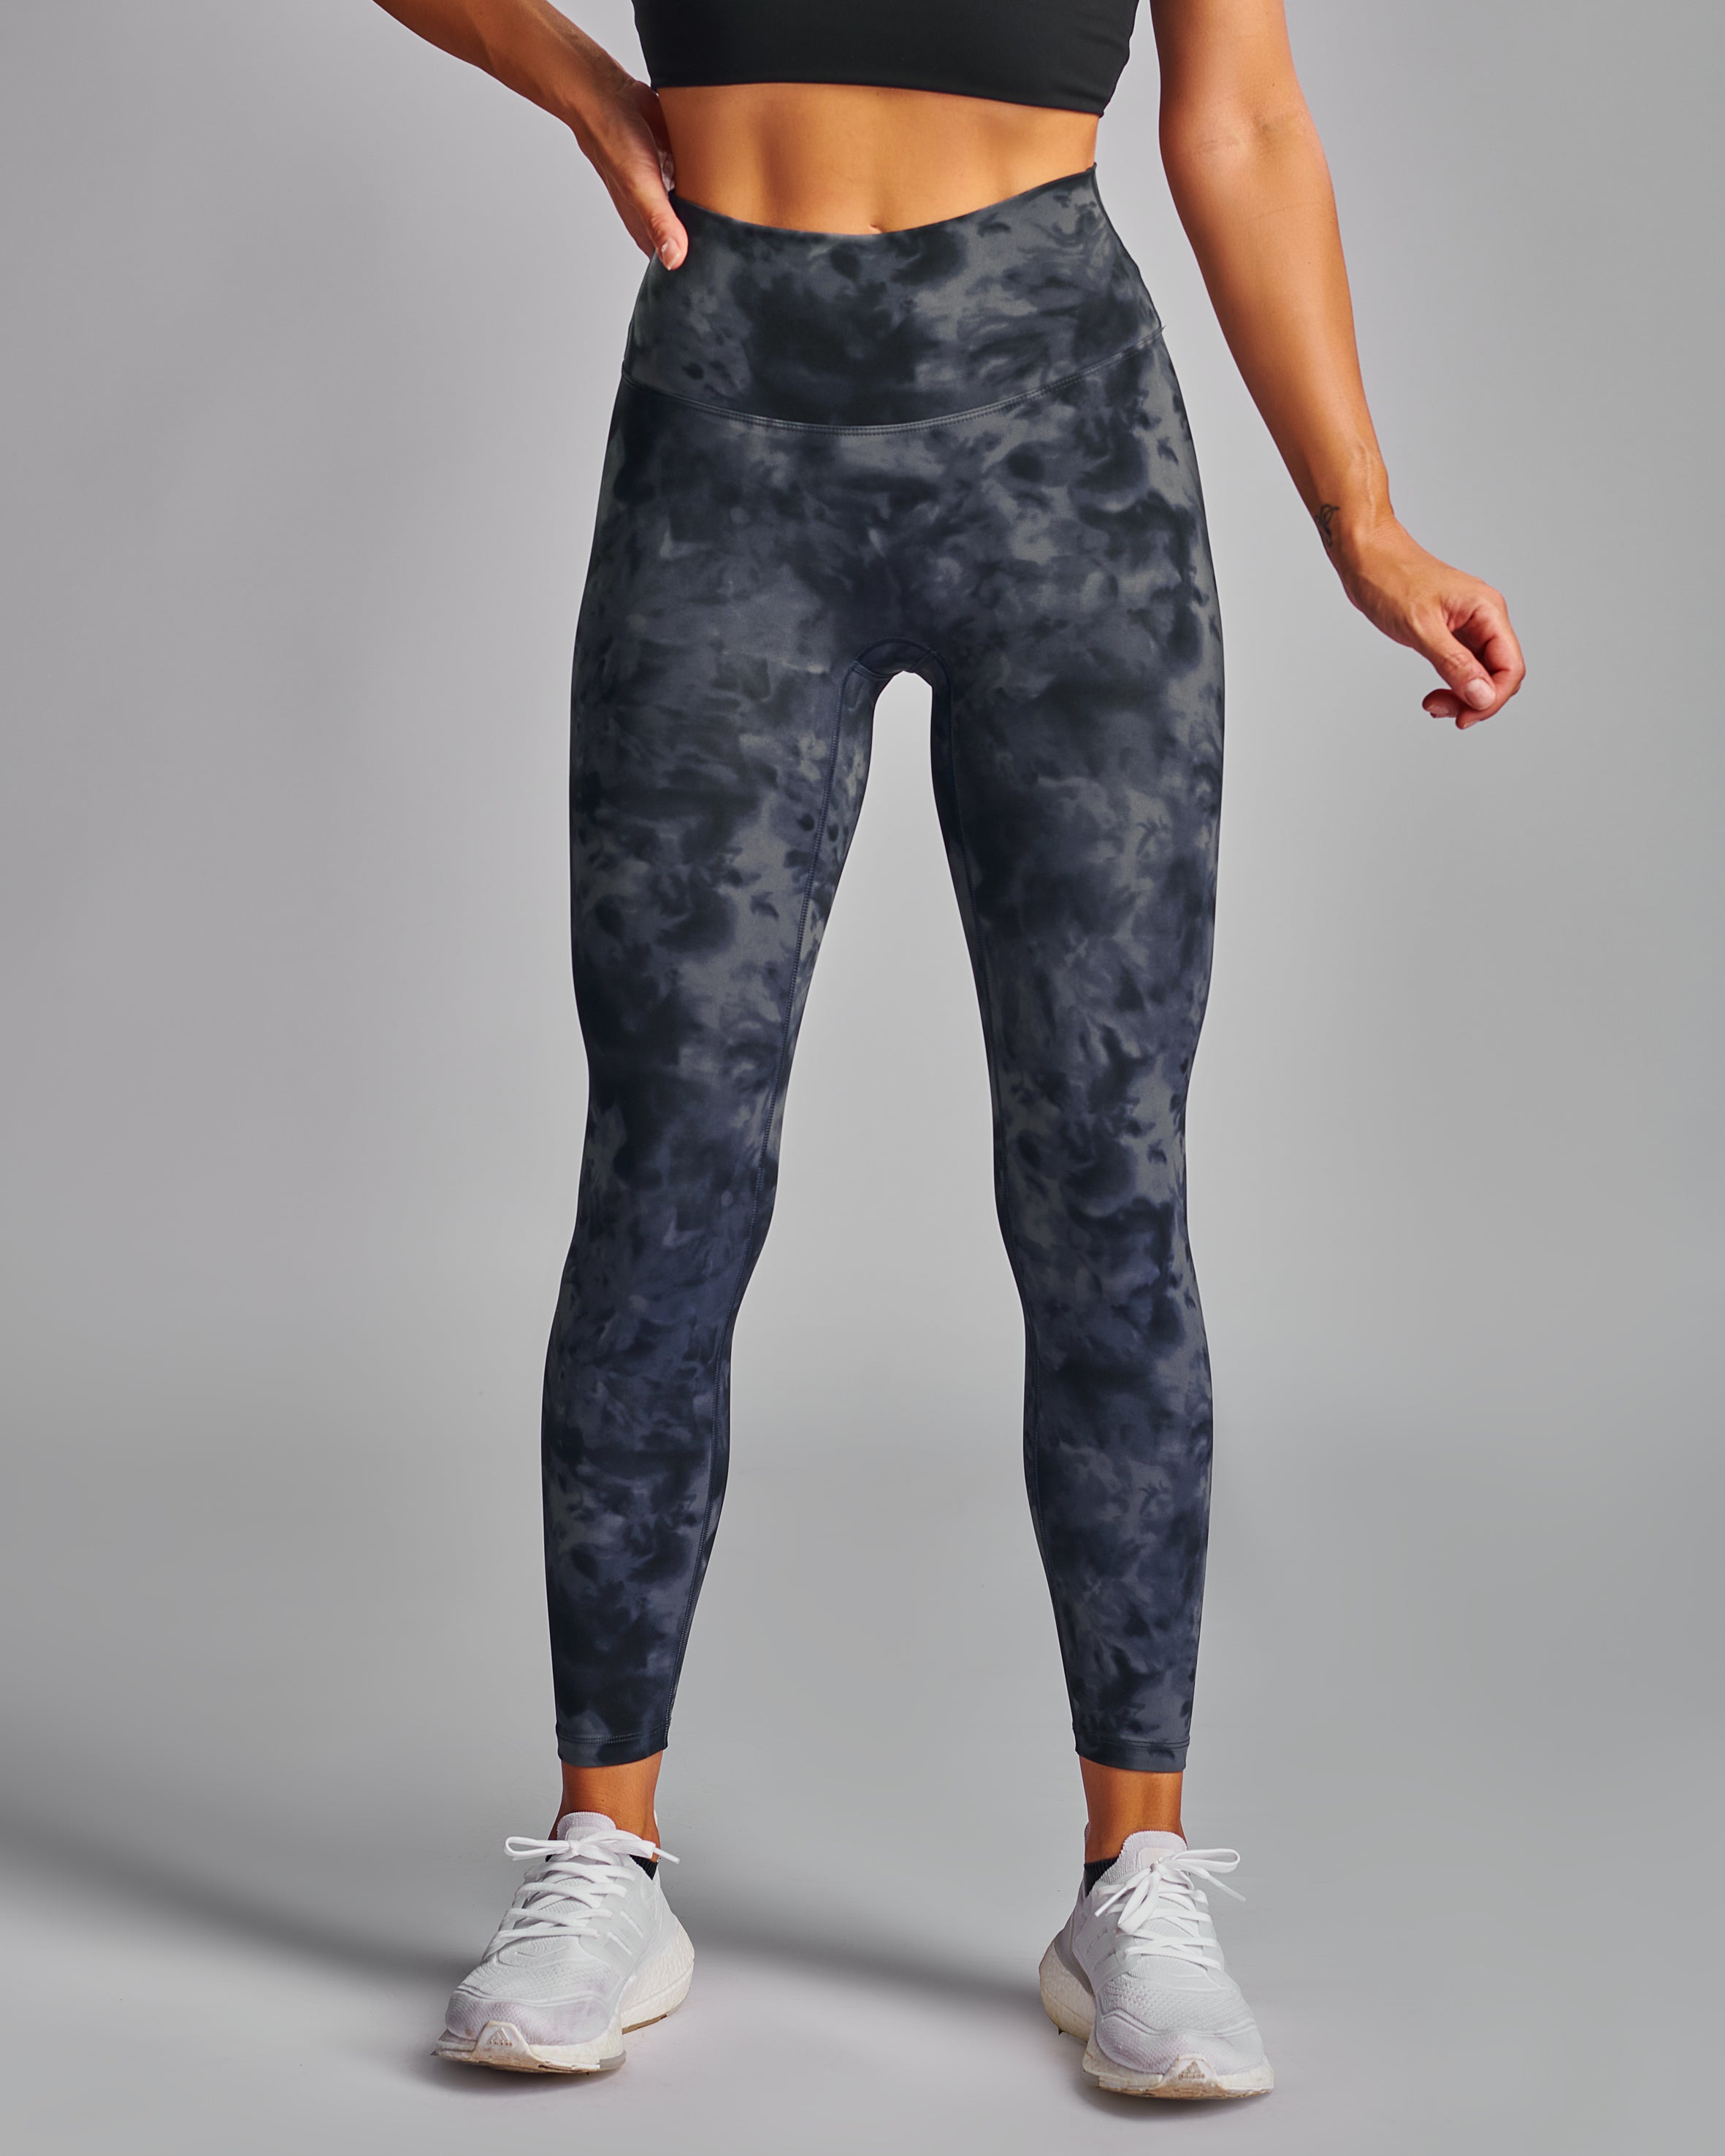 Align Leggings. Graphite Black Print Ultralux fabric. – Pineapple Athleisure